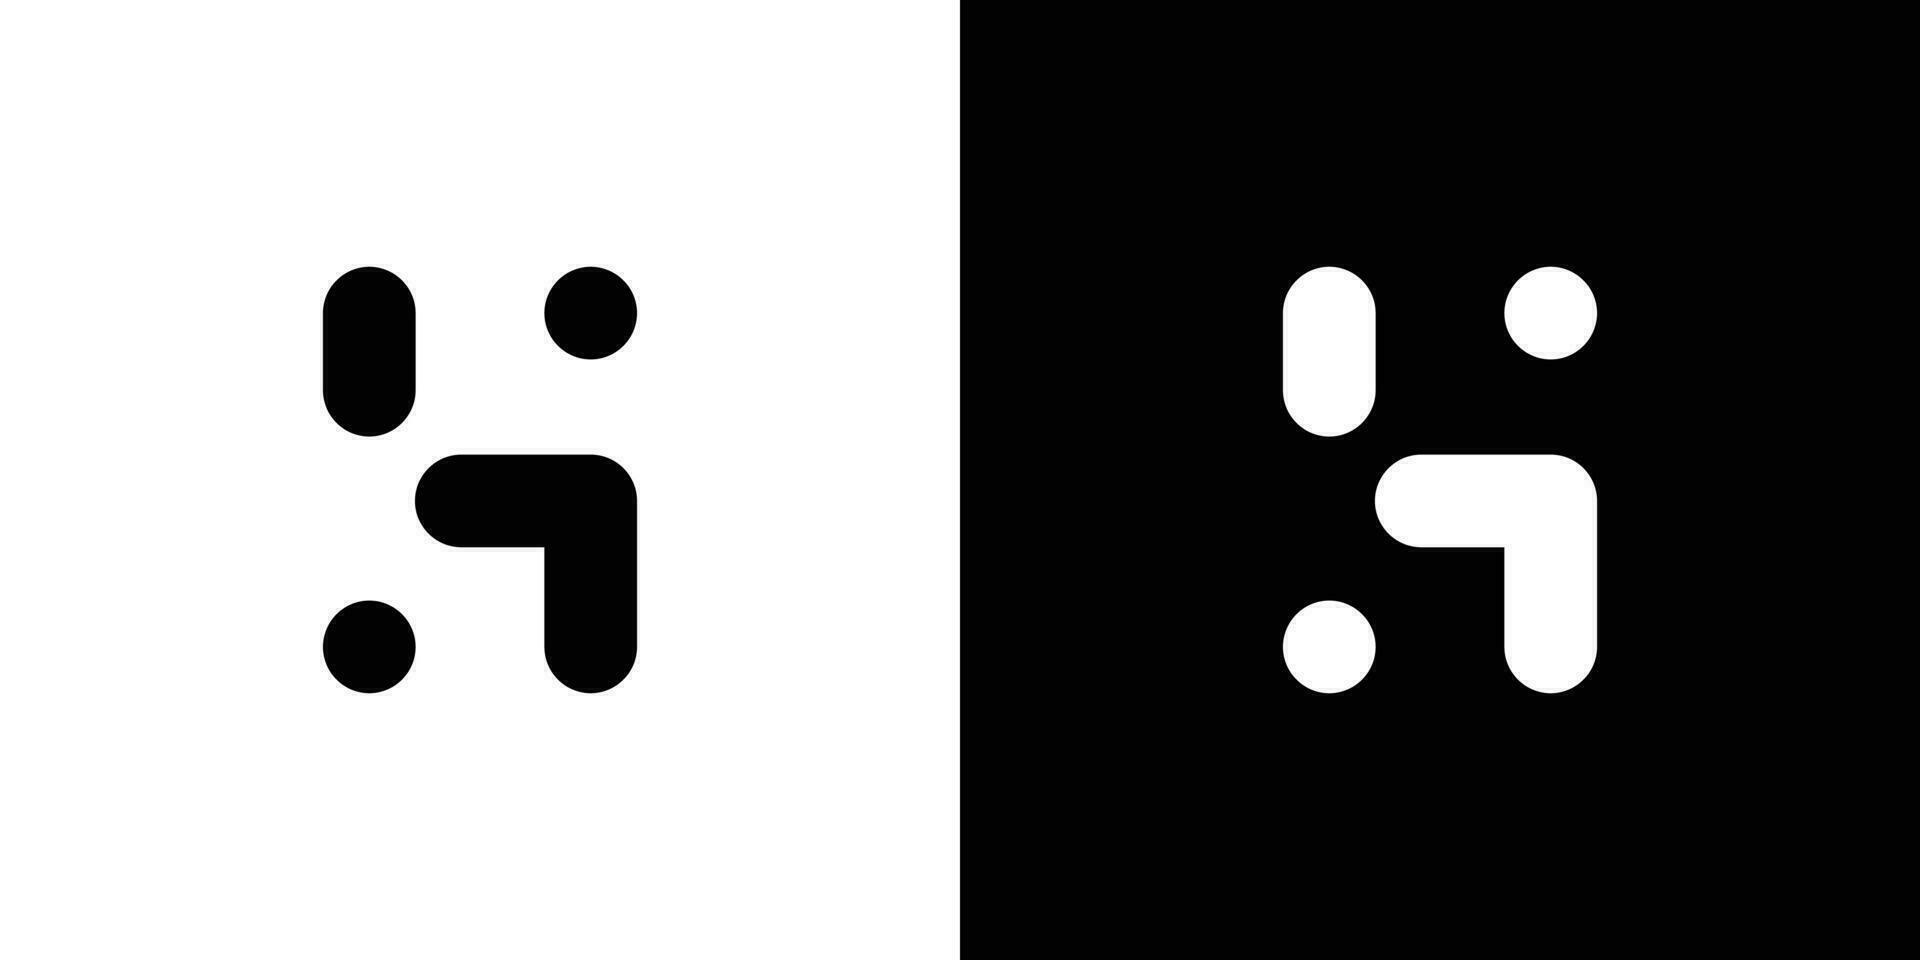 moderno e unico h logo design vettore